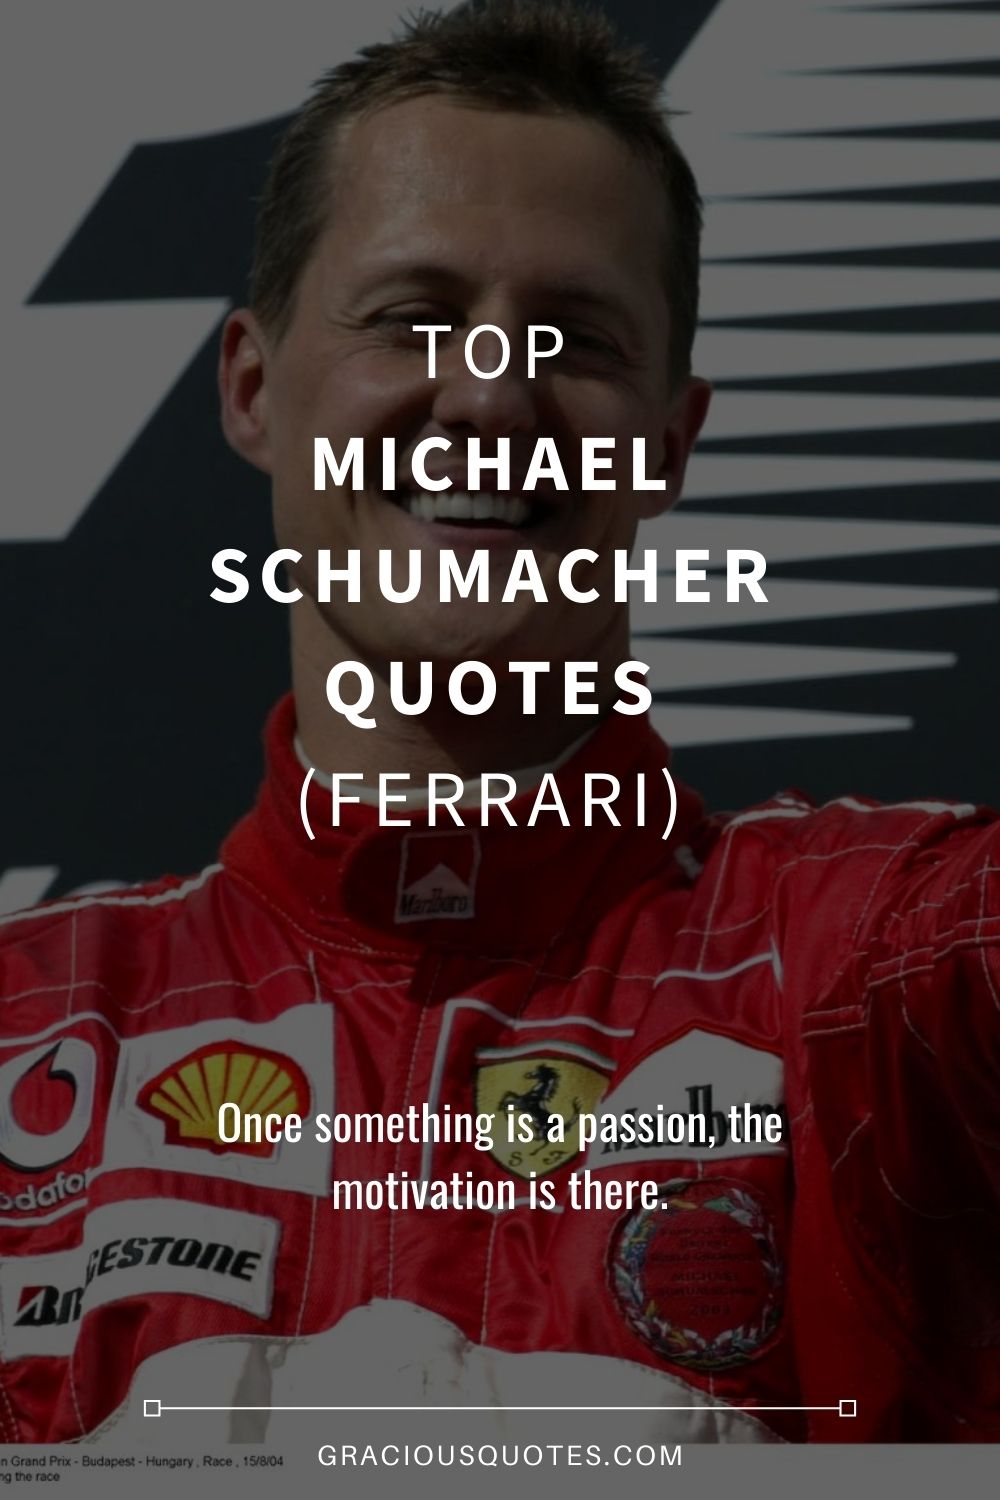 Top Michael Schumacher Quotes (FERRARI) - Gracious Quotes